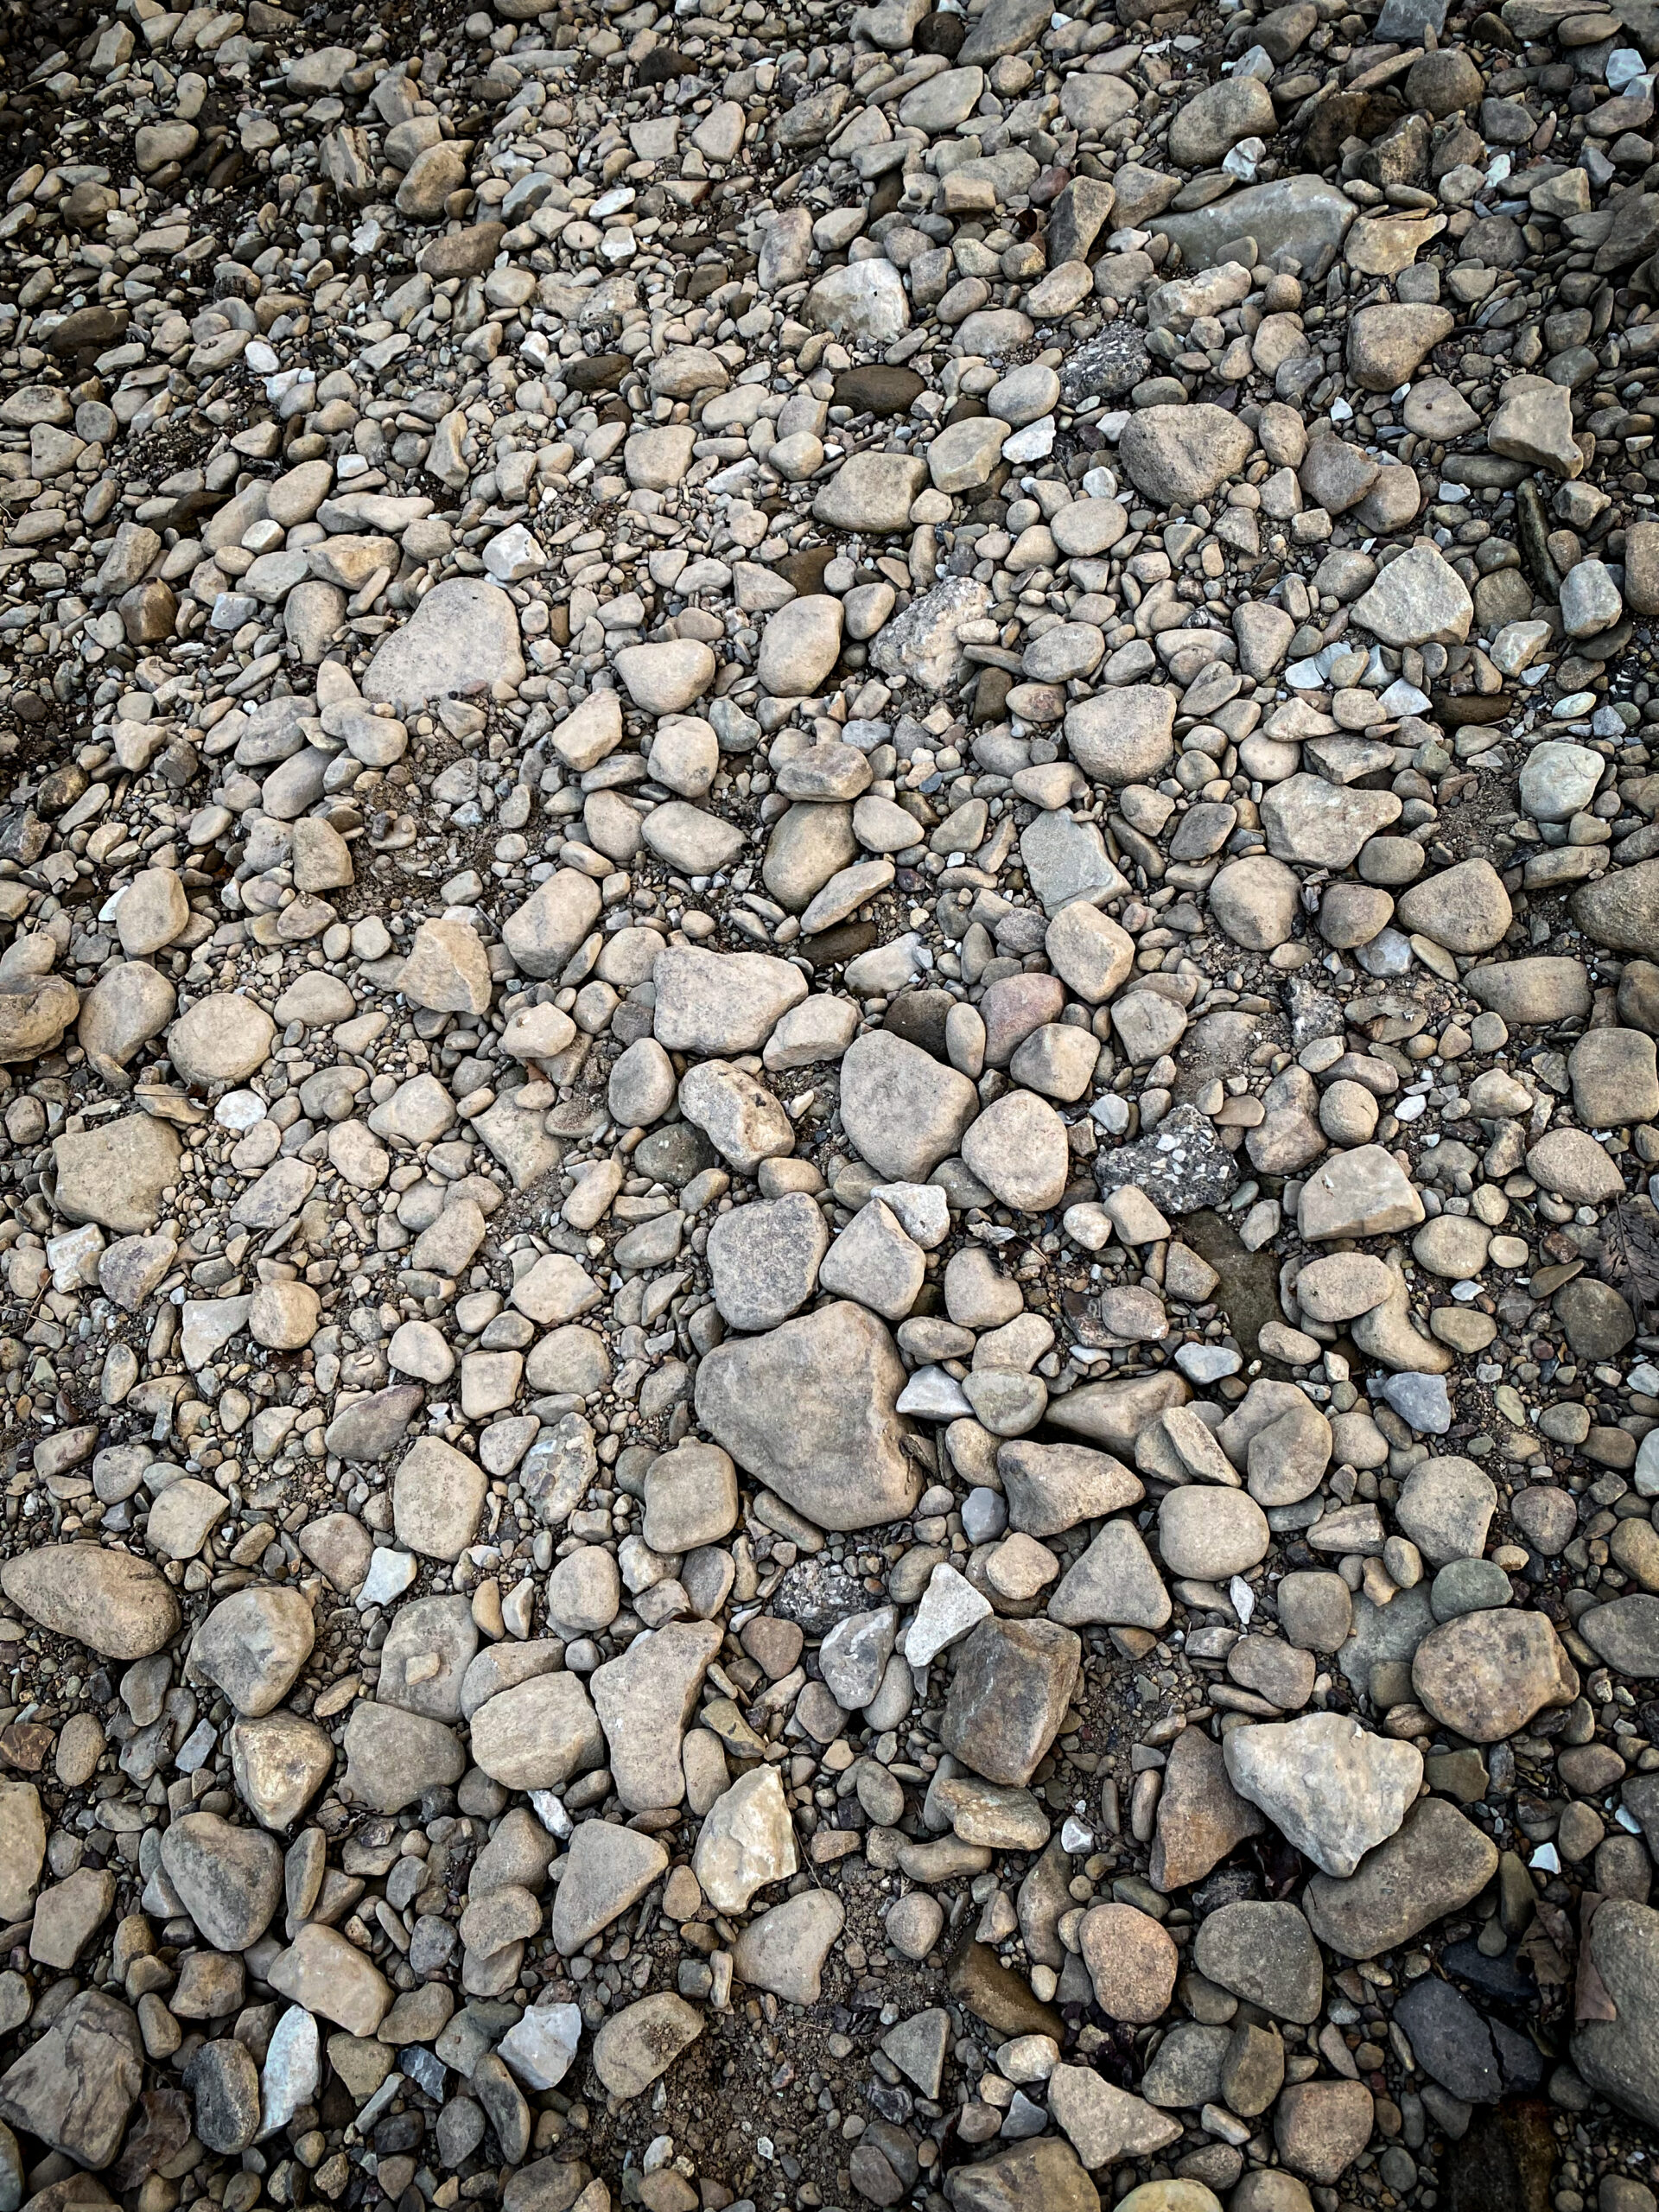 Rocks at Elk River Access in Clendenin